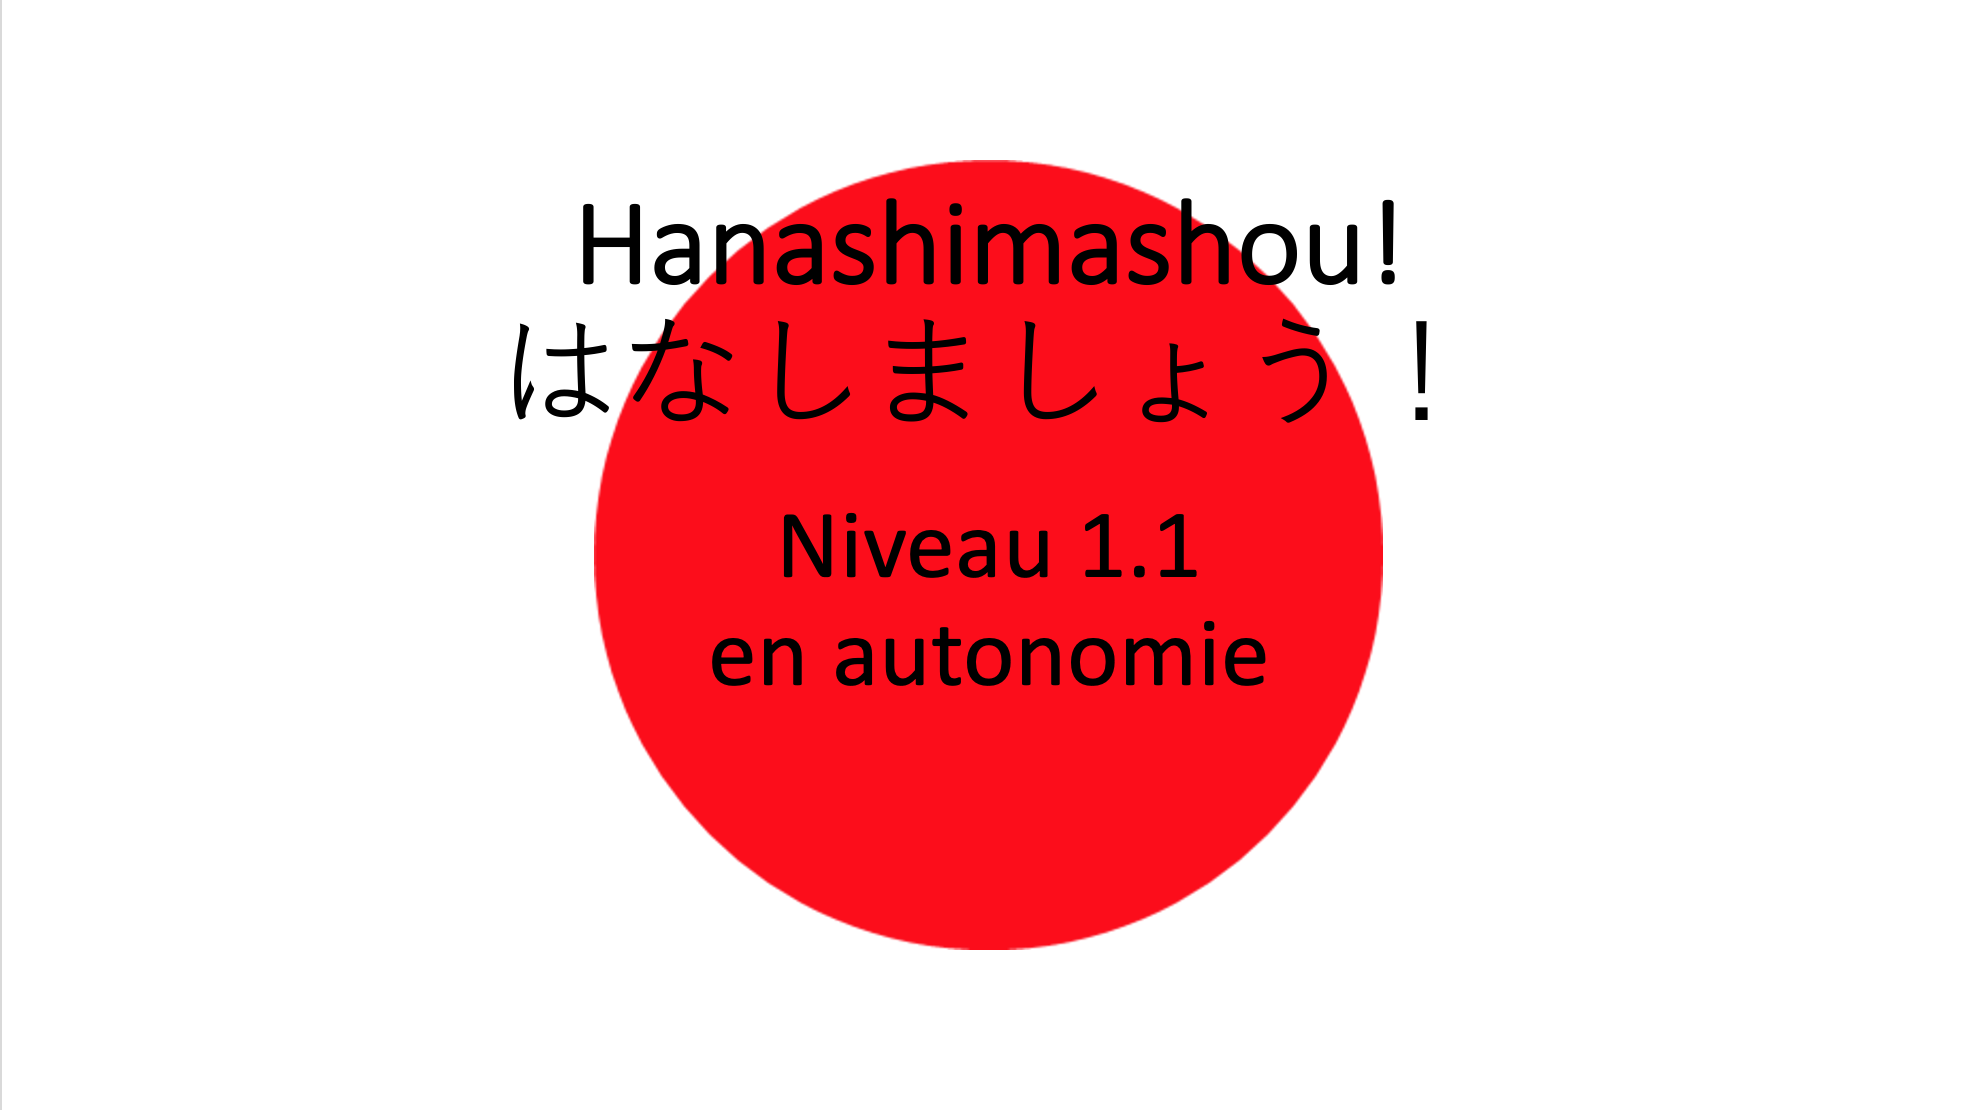 Hanashimashou Niveau 1.1. en autonomie